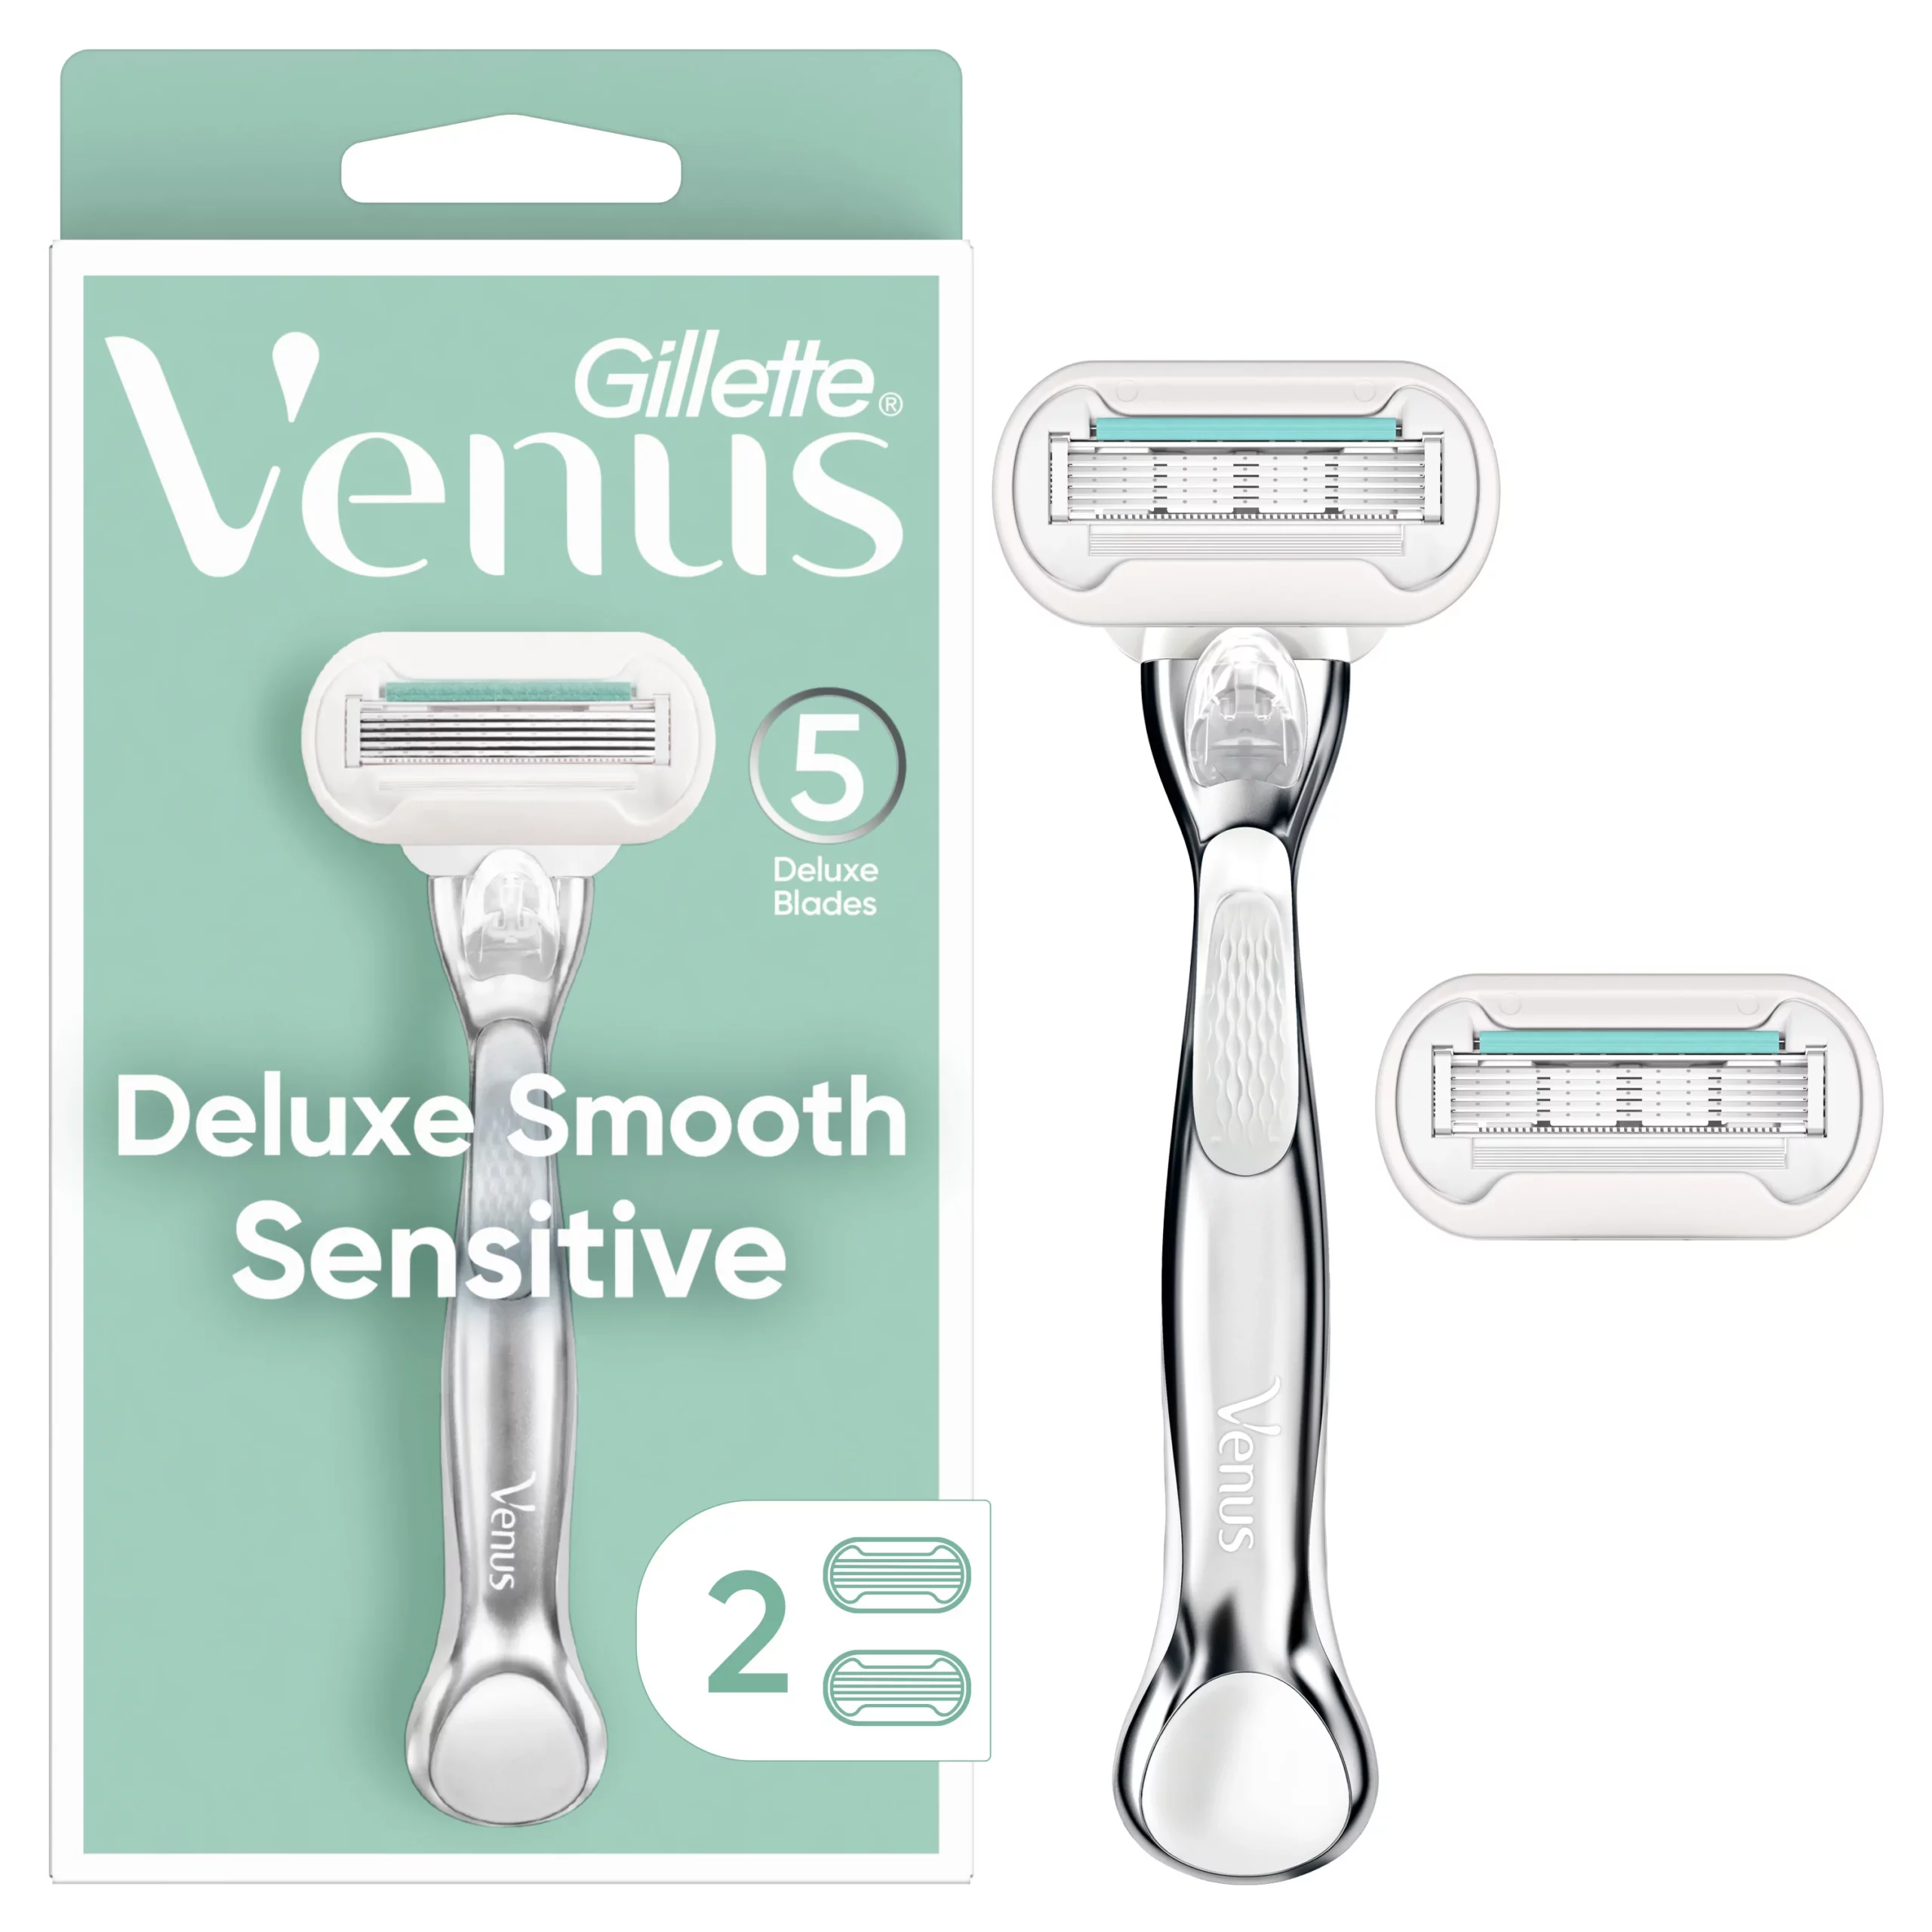 10 Venus Deluxe Smooth Razor Reviews 2023 - Buyer's Guide